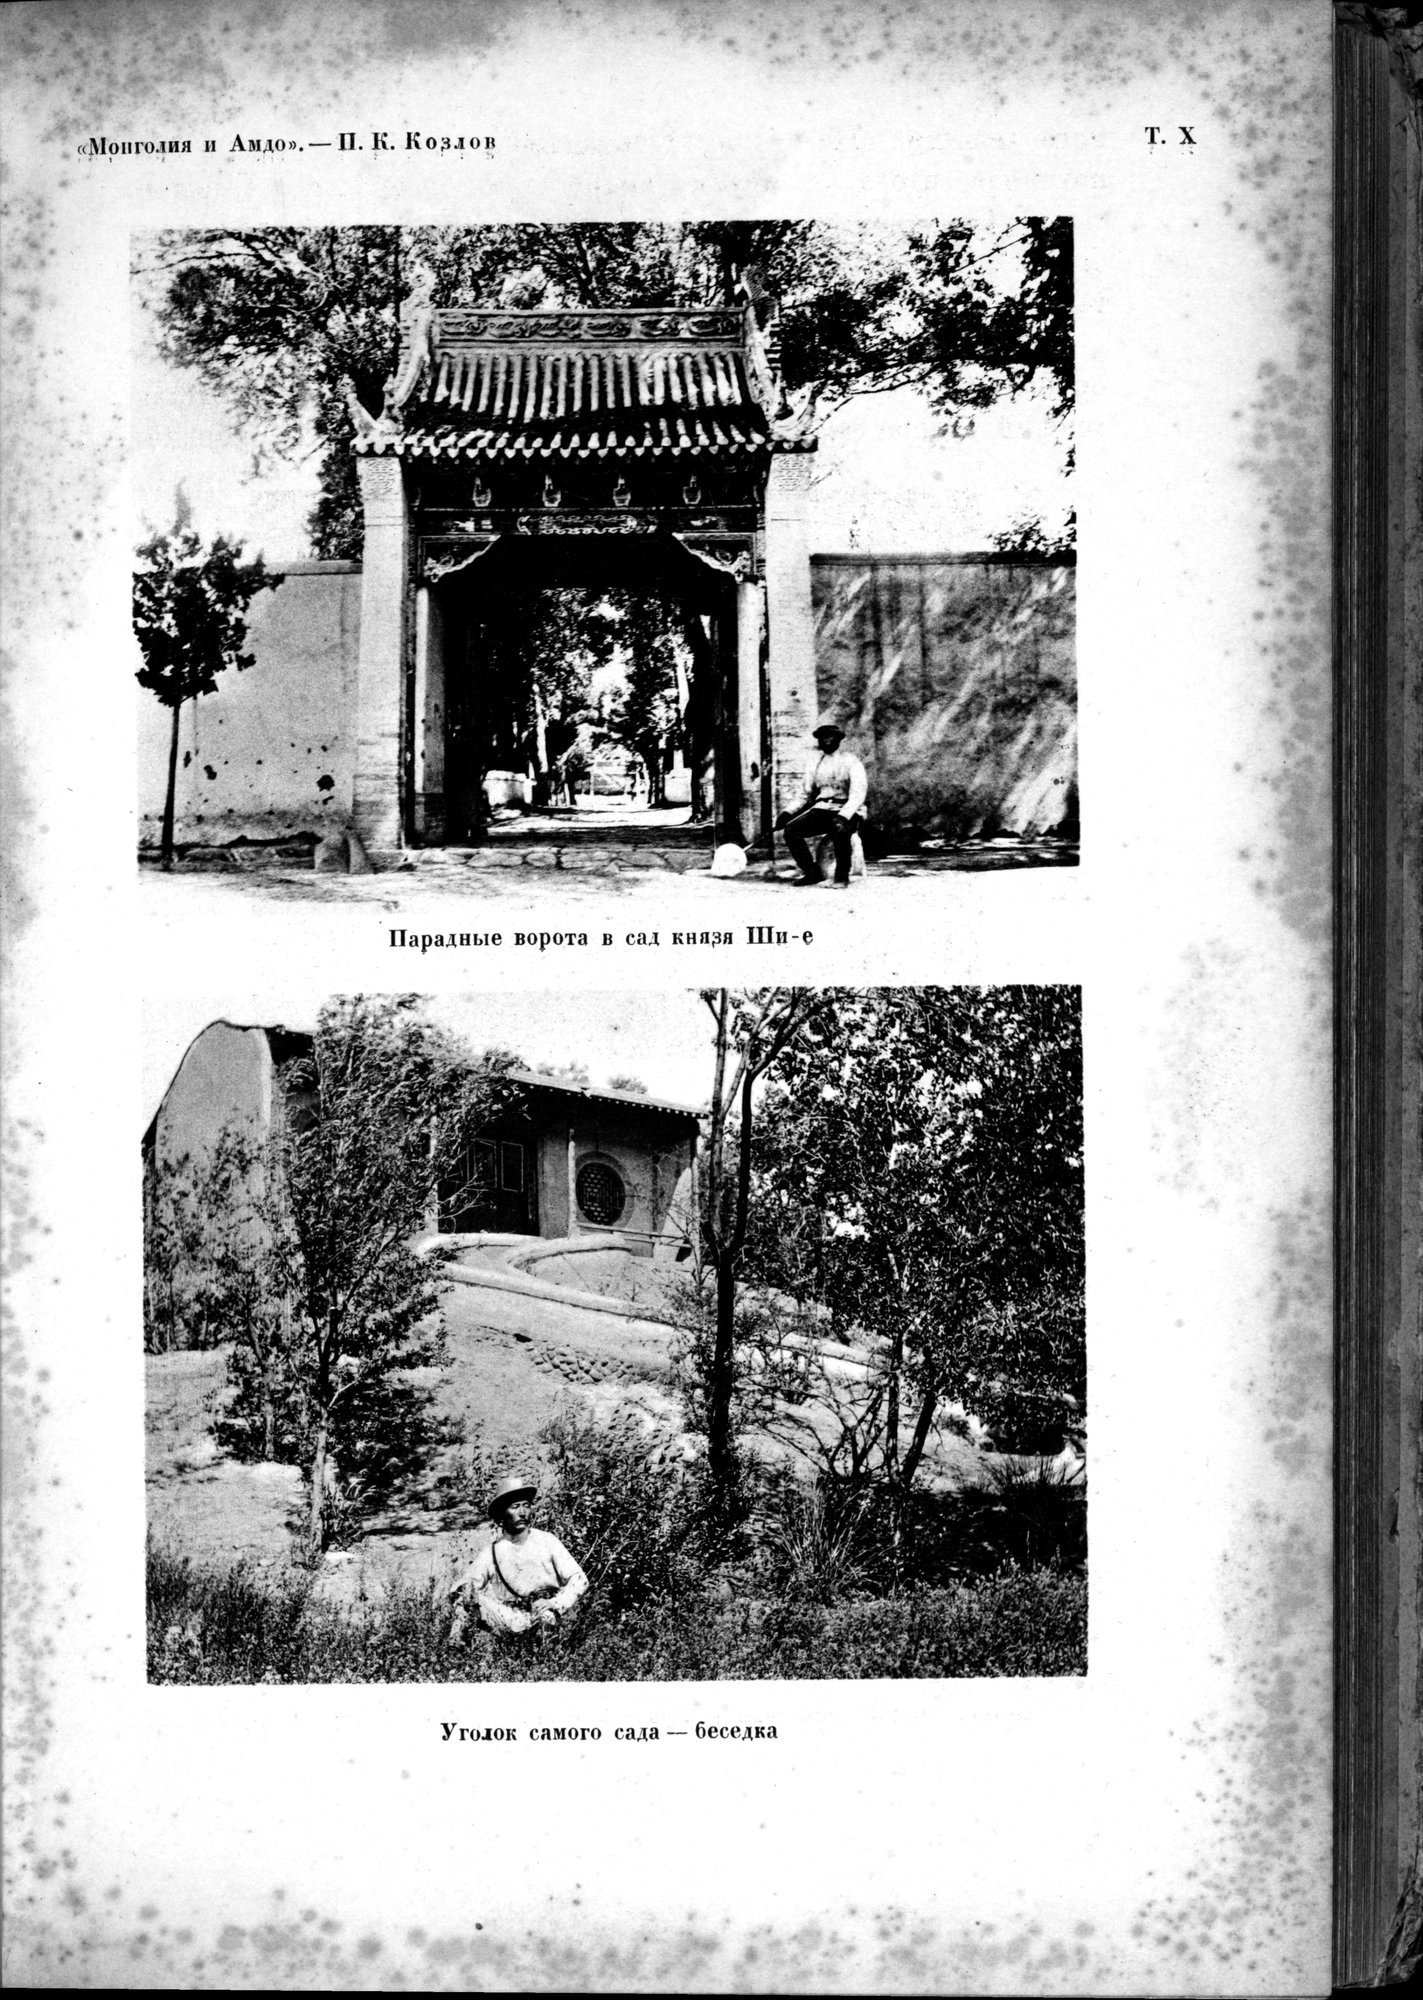 Mongoliya i Amdo i mertby gorod Khara-Khoto : vol.1 / Page 199 (Grayscale High Resolution Image)